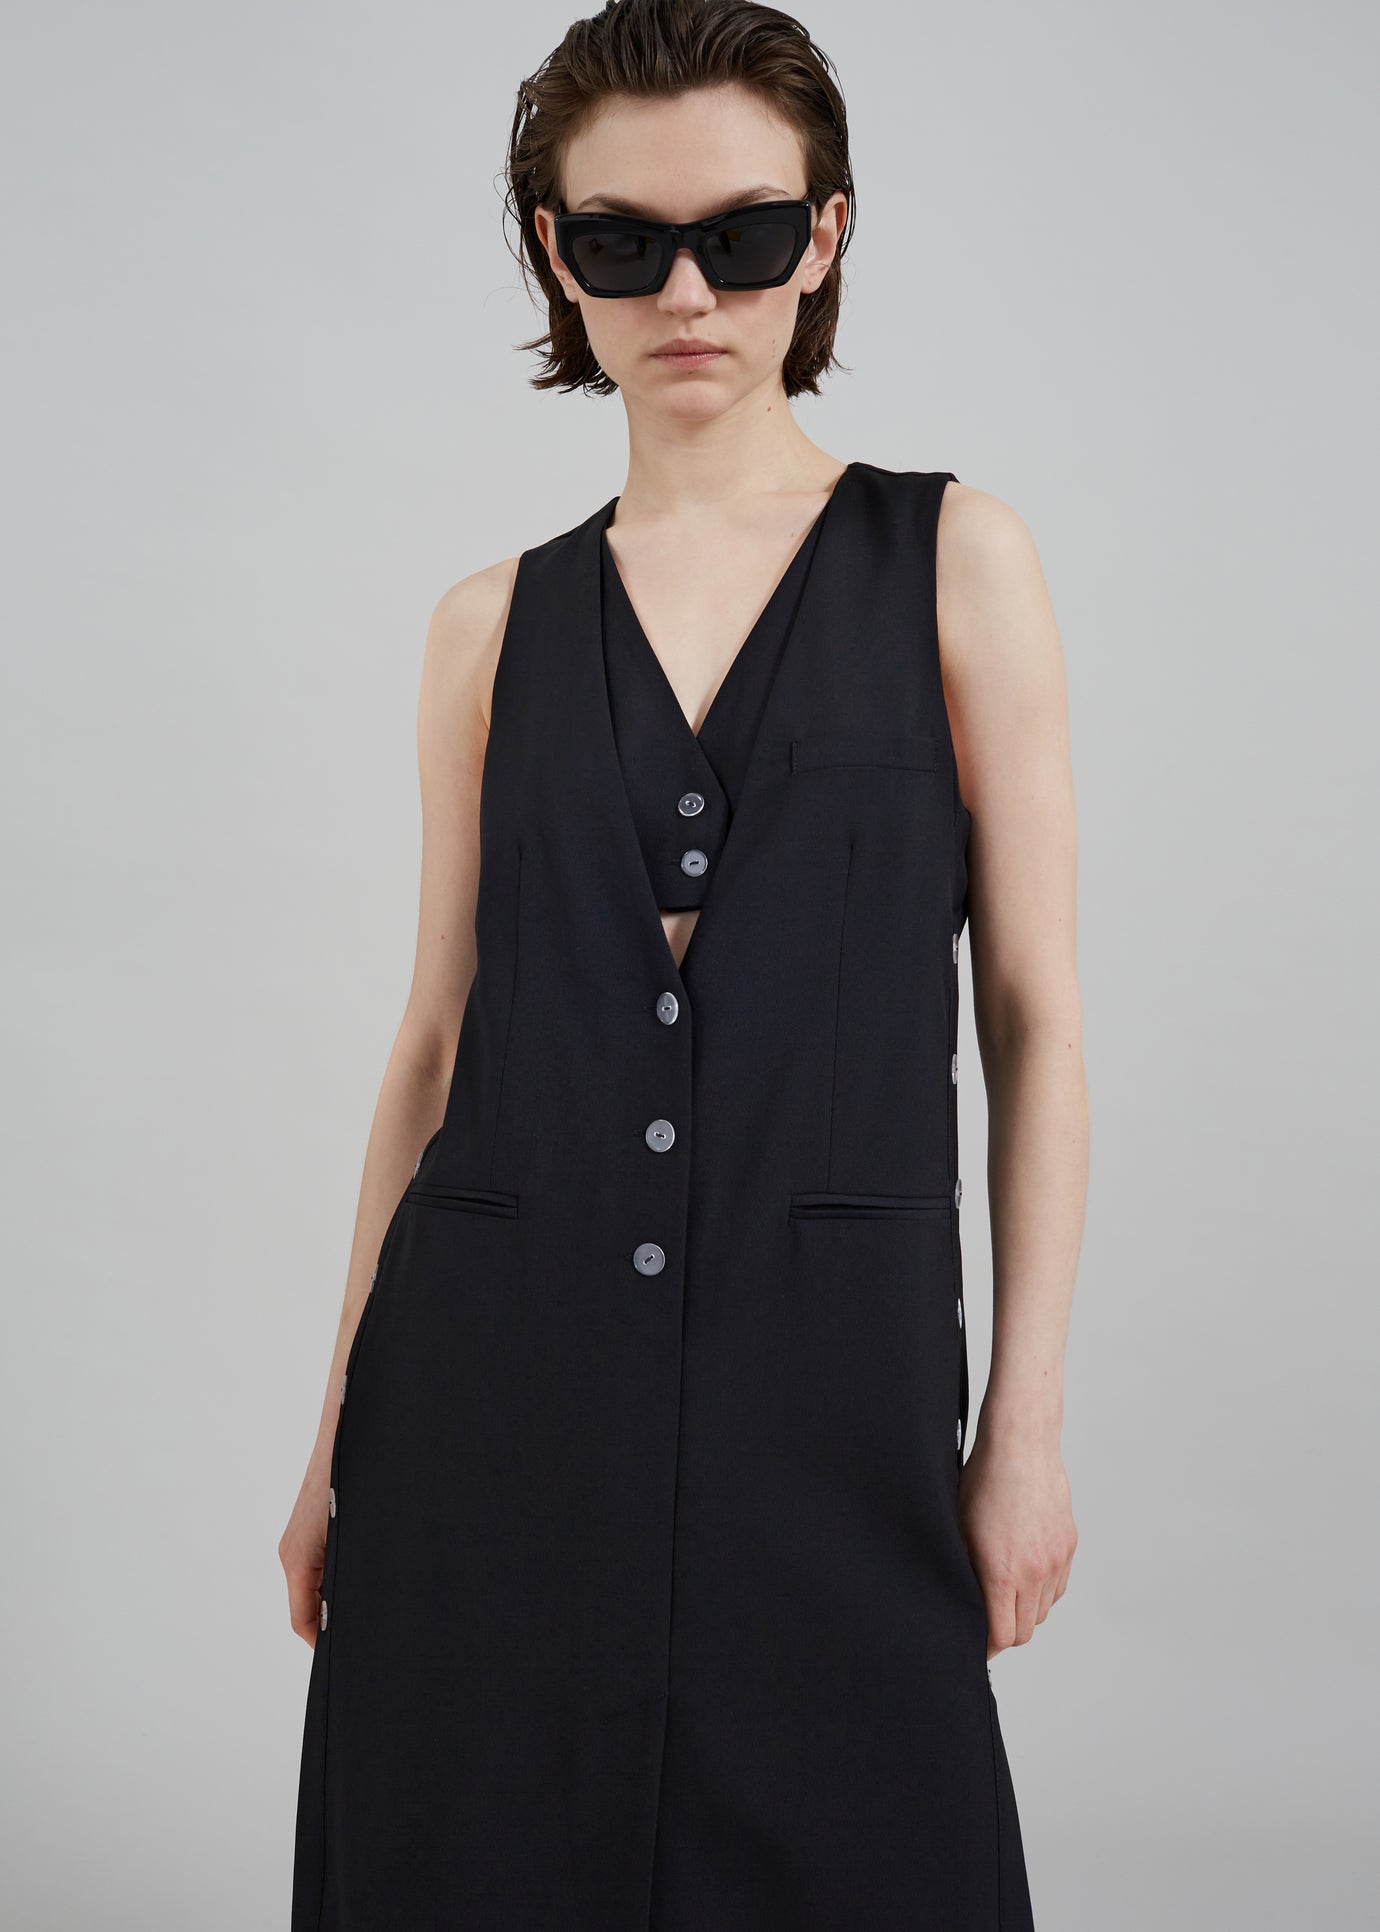 3.1 Phillip Lim Tailored Vest Dress with Set-In Bra - Black